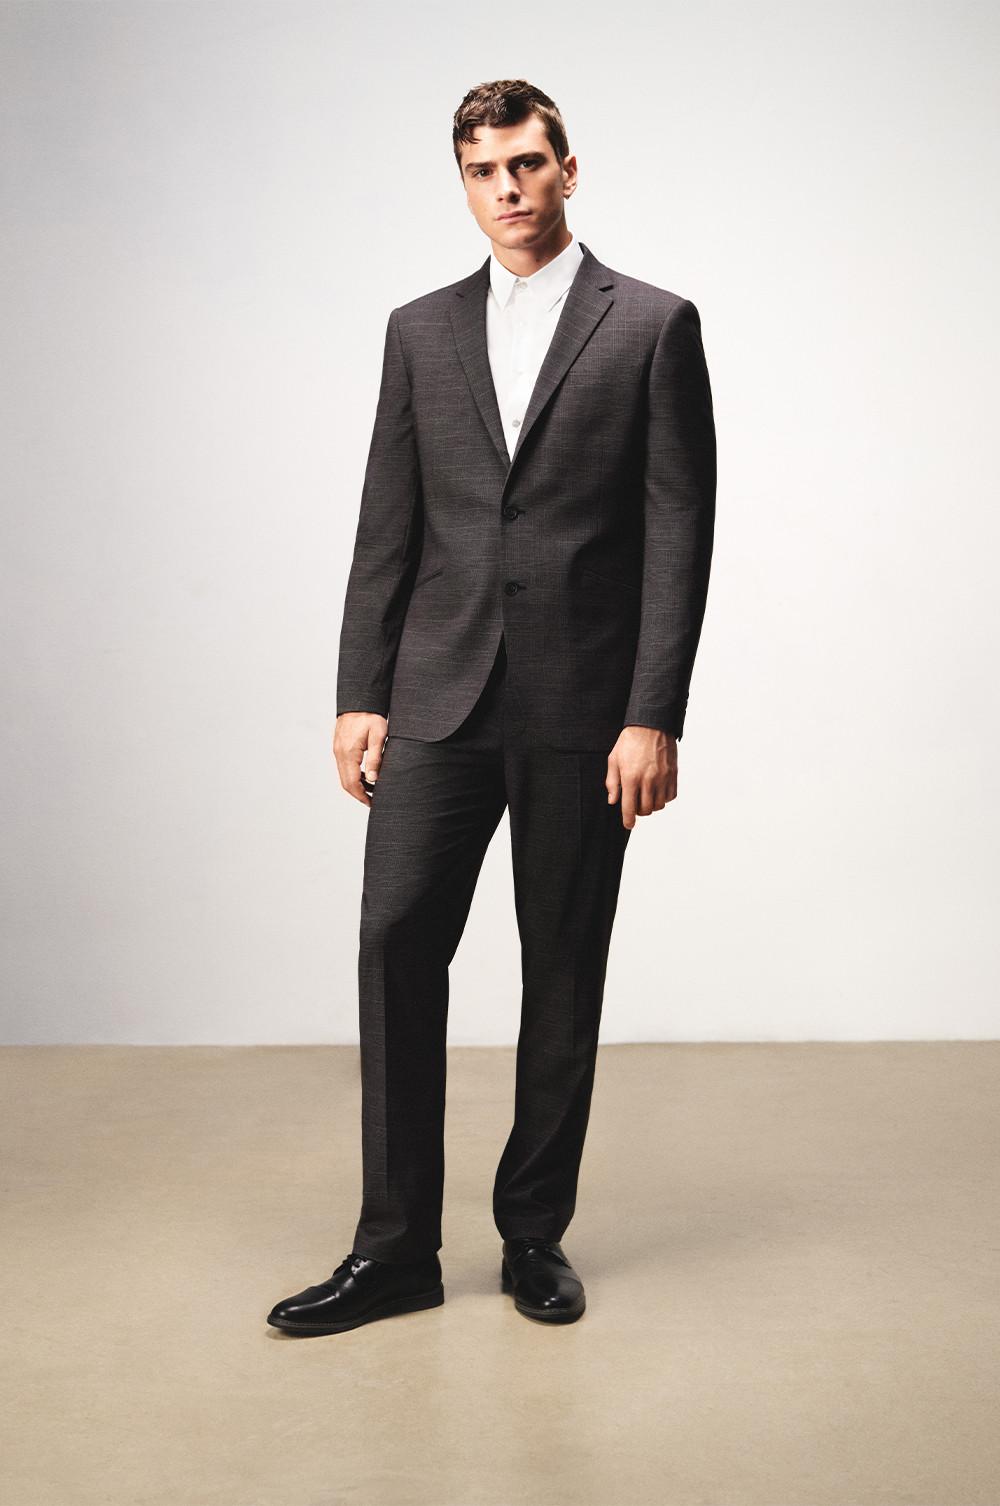 Prendas formales masculinas indispensables: camisas de noche Primark España